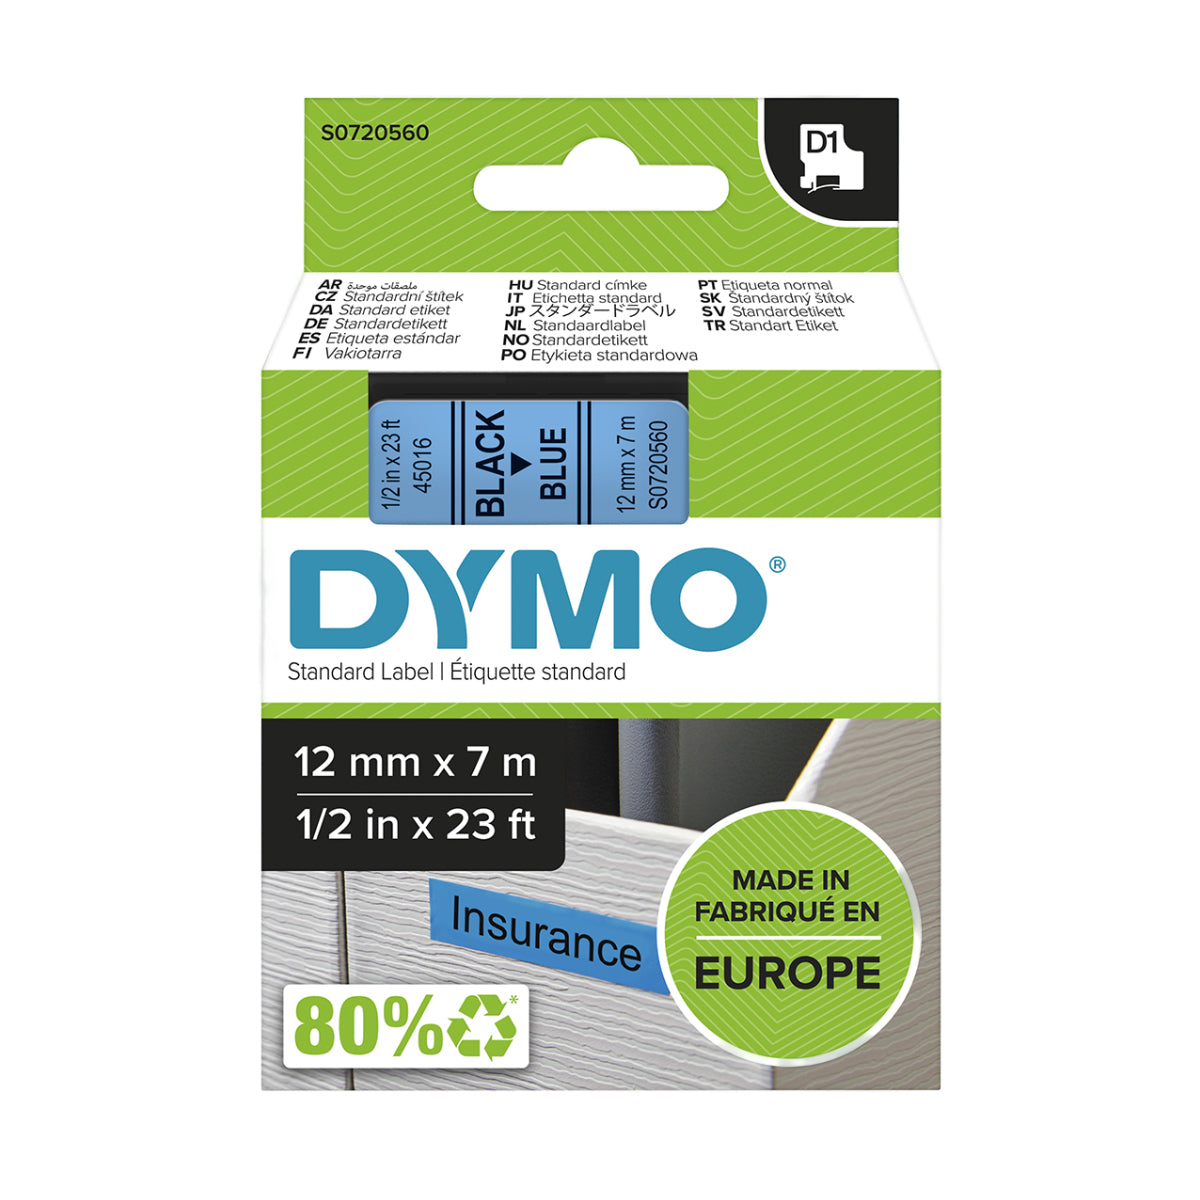 Dymo D1 Label Cassette, 12 mm x 7 m, Black on Blue - 45016